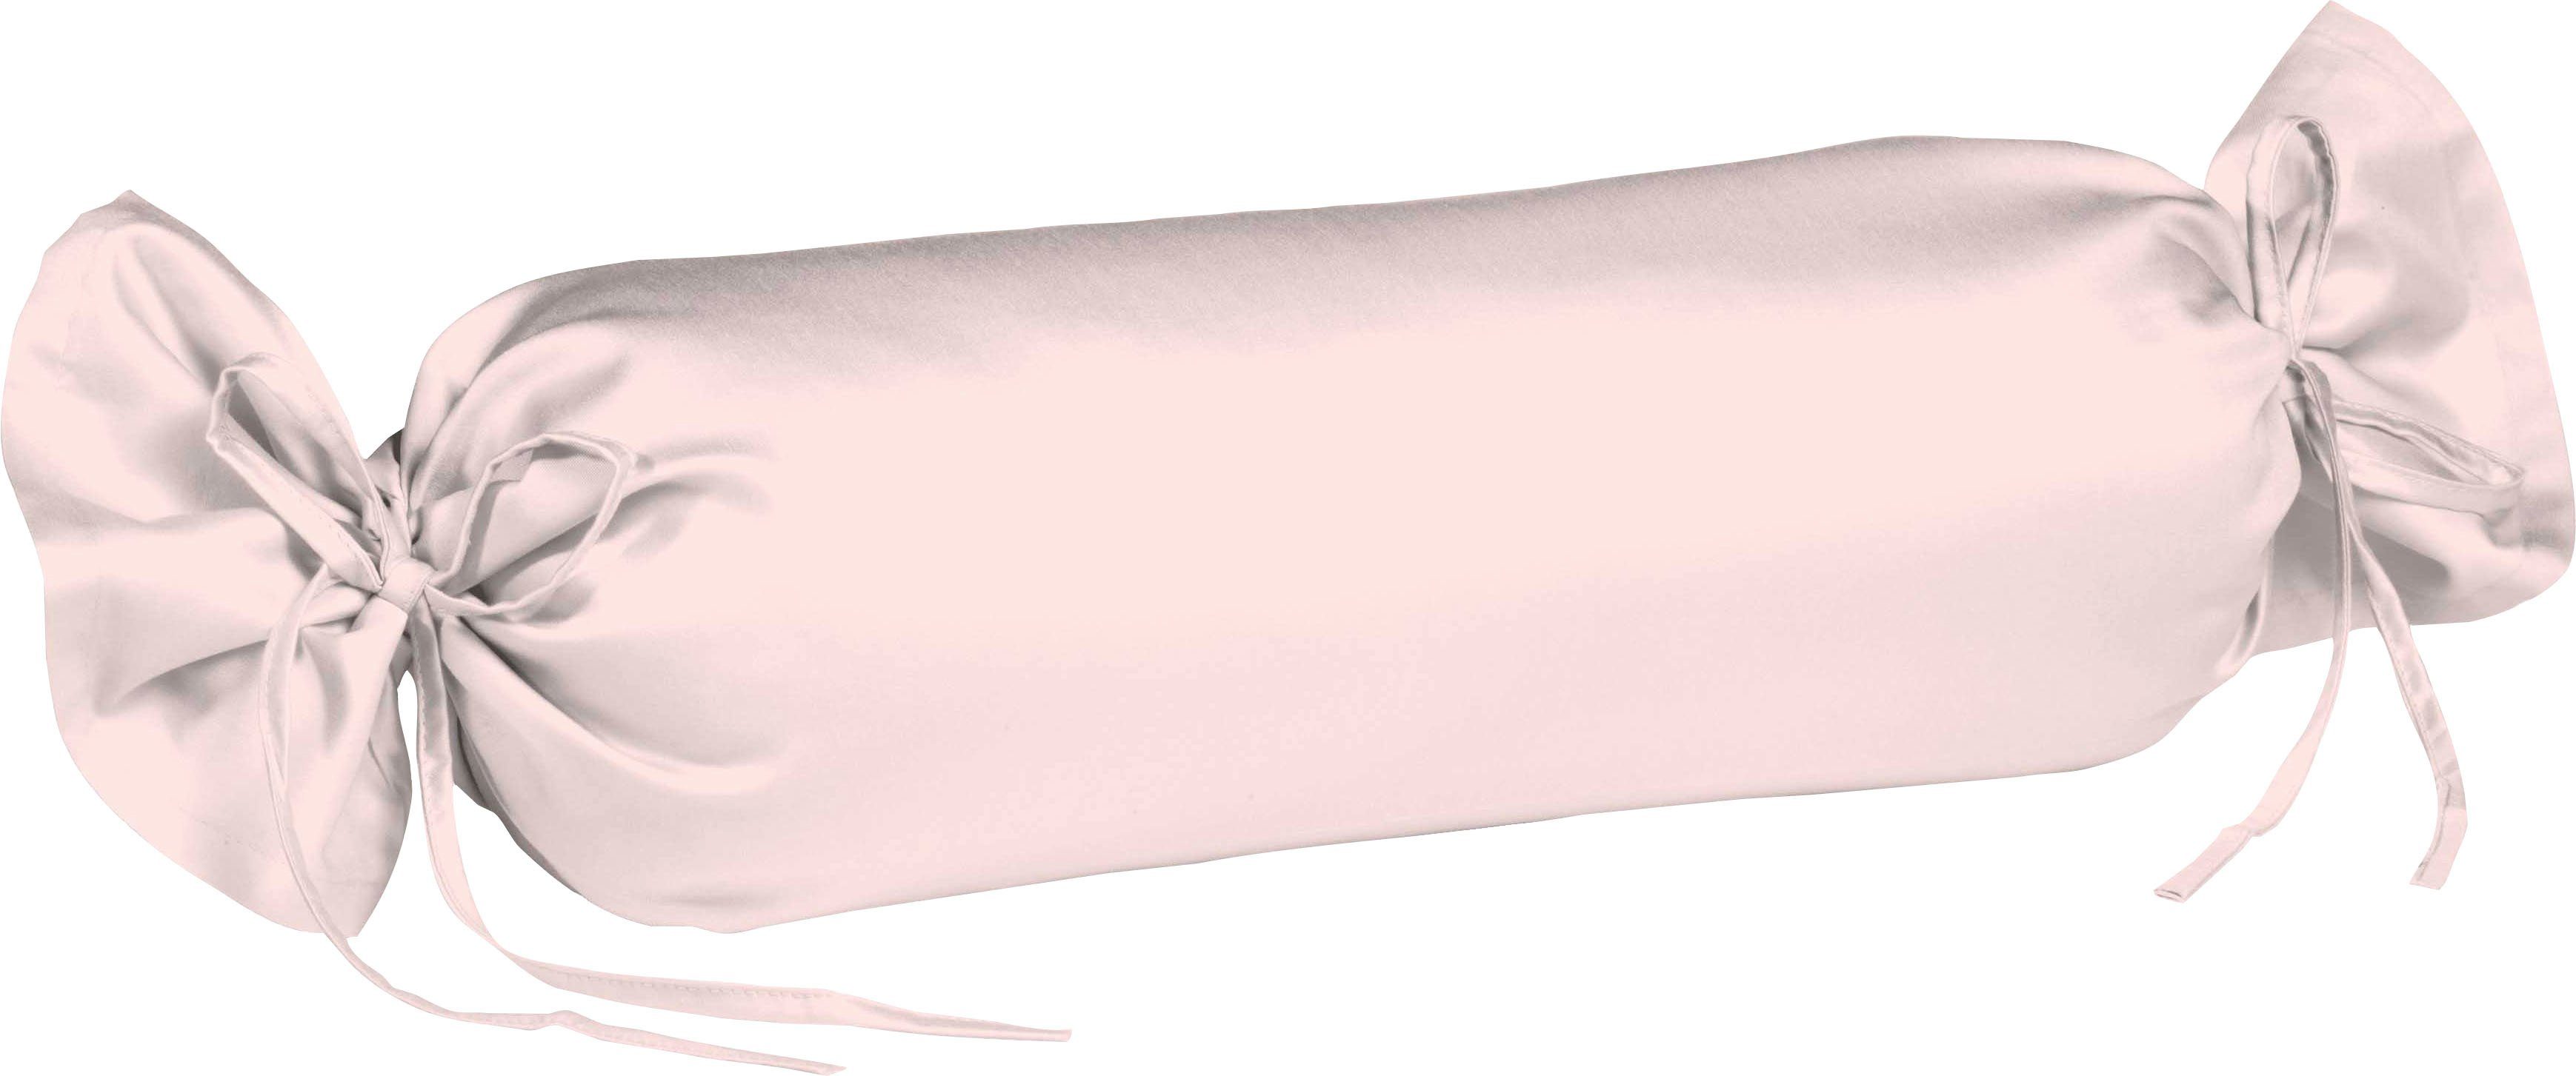 Nackenrollenbezug Colours Interlock Jersey, fleuresse (2 Stück), in bügelfreier Interlock Qualität rosé